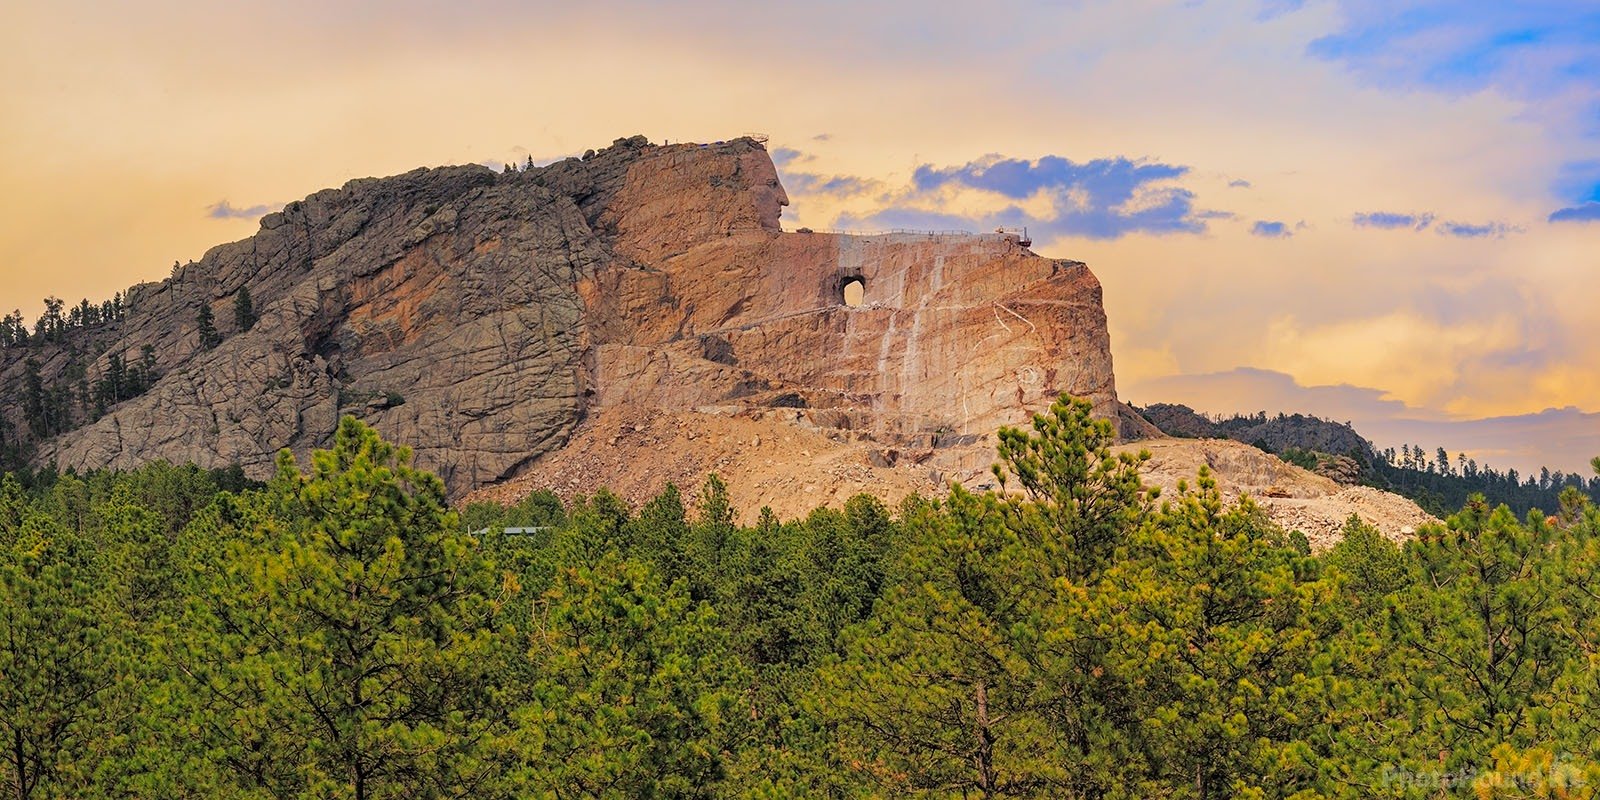 Image of Crazy Horse Memorial by John Freeman